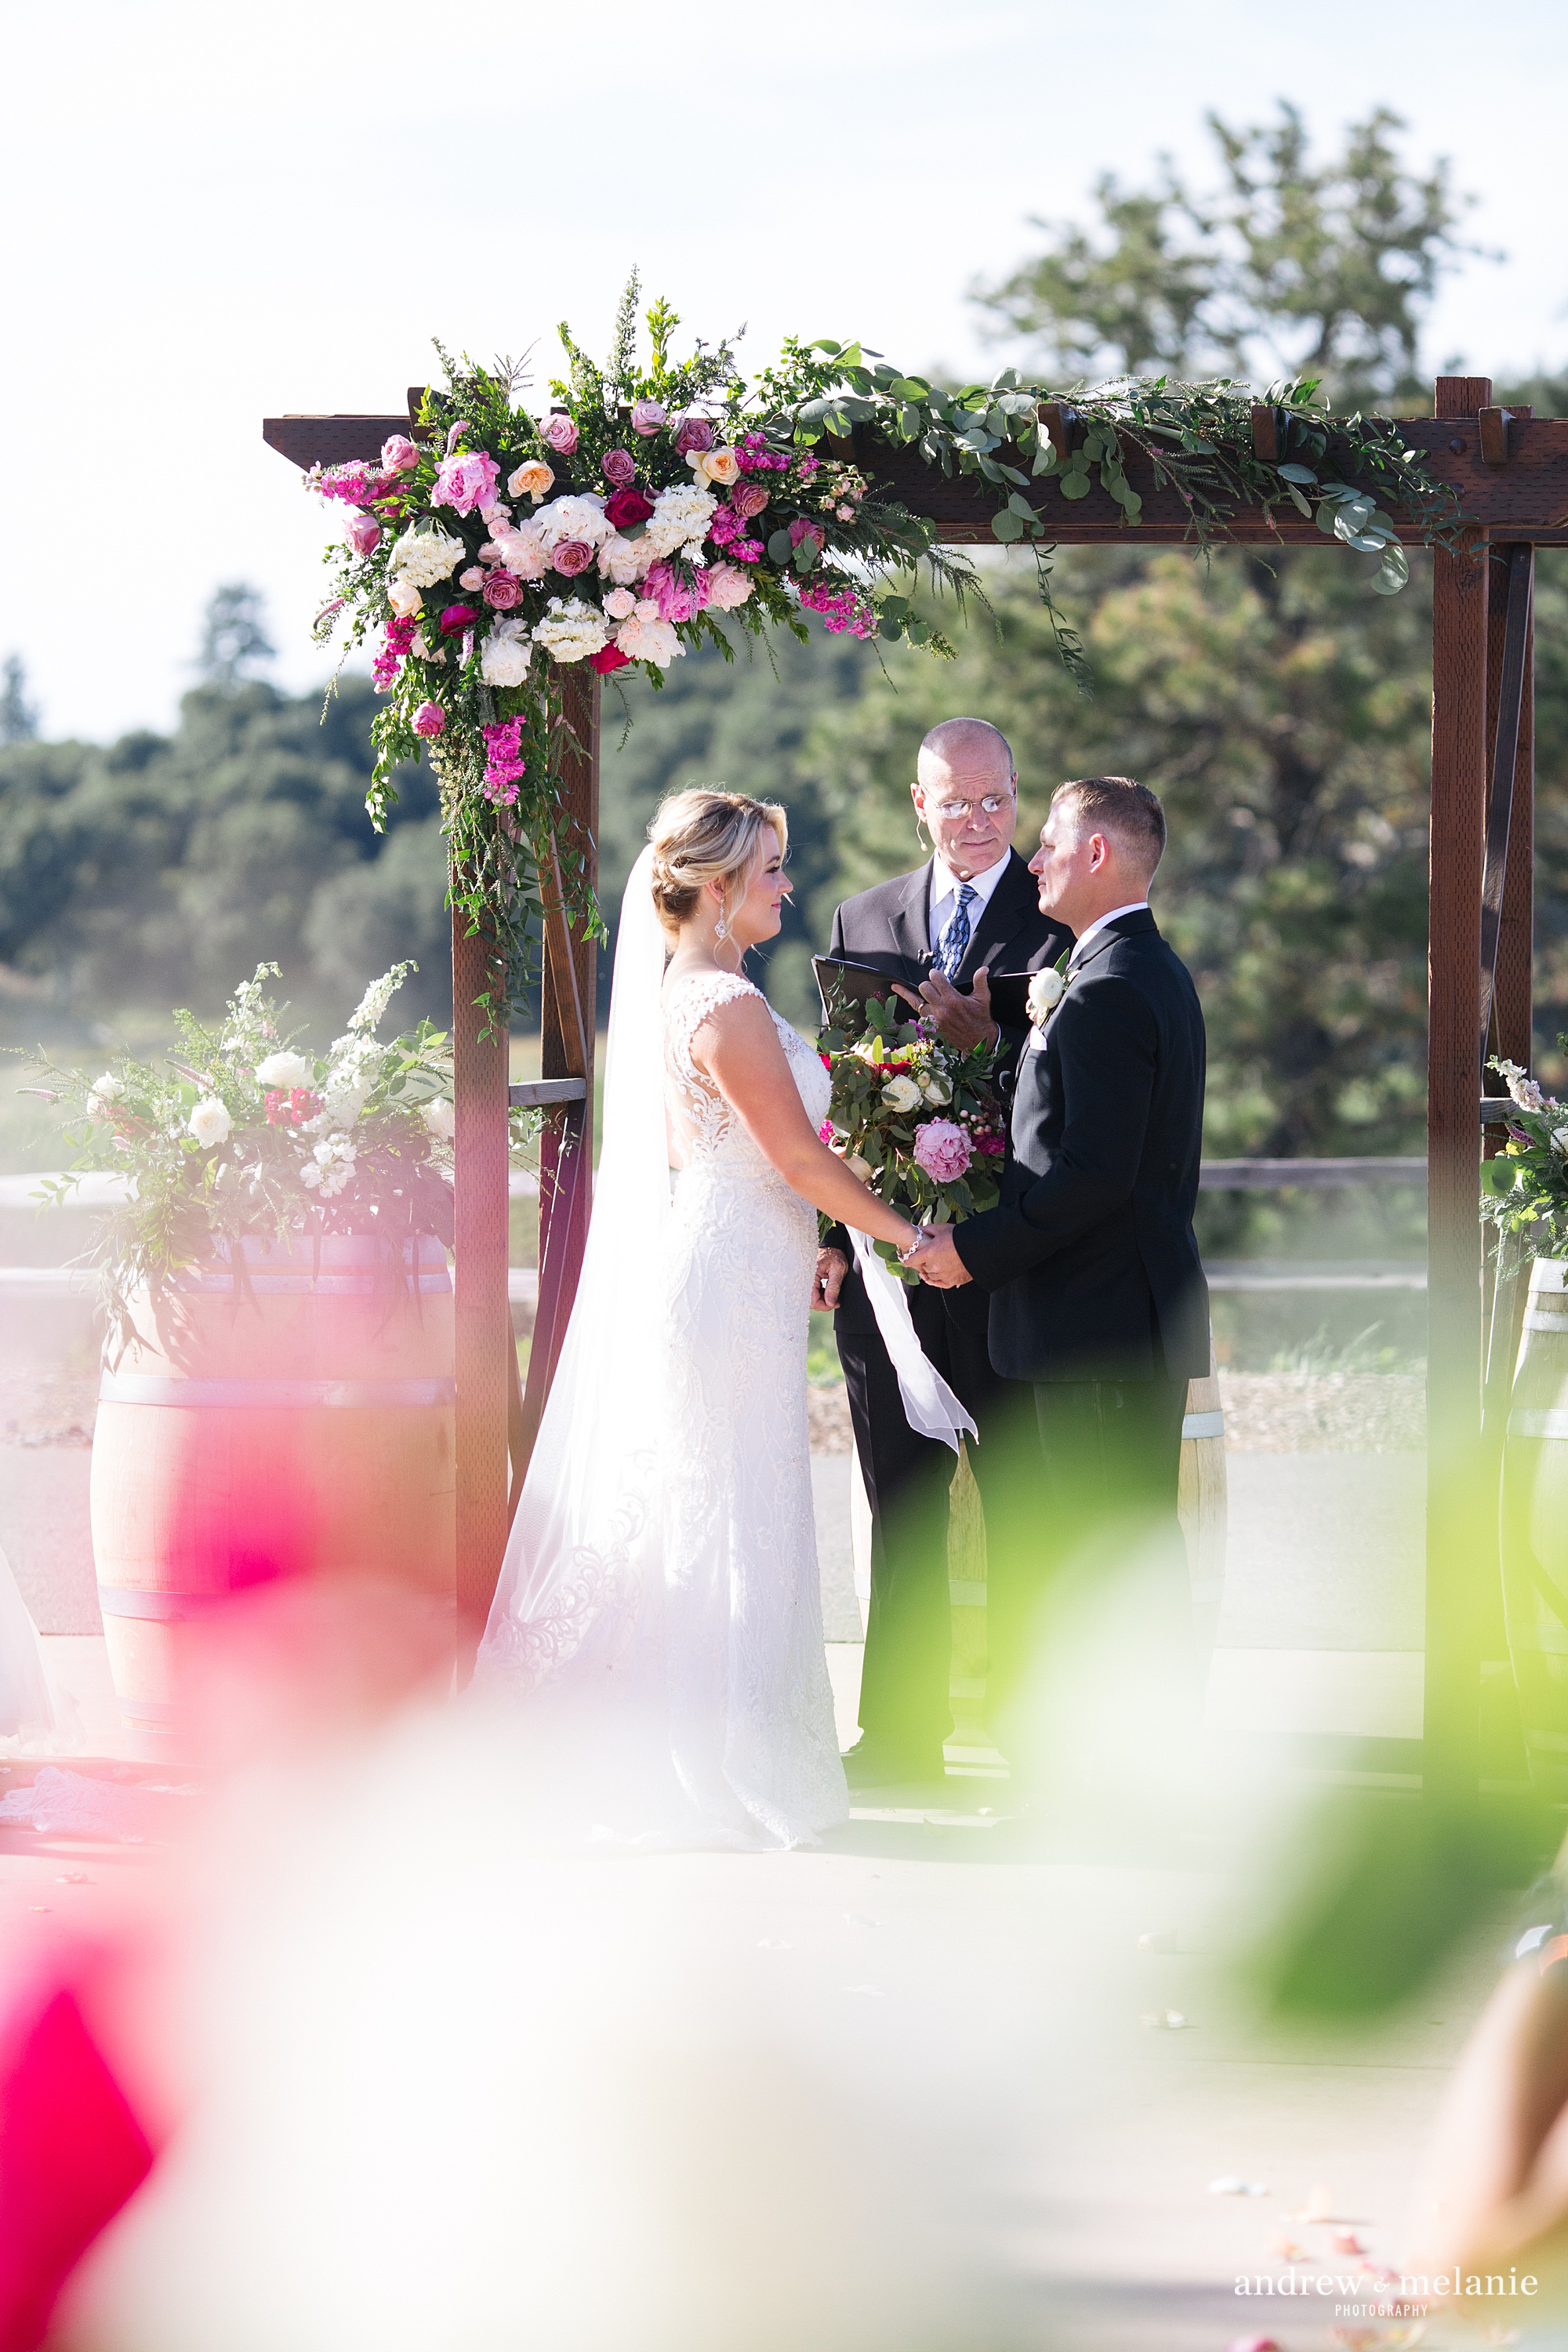 wedding ceremony photo at Helwig Winery in Jackson, CA